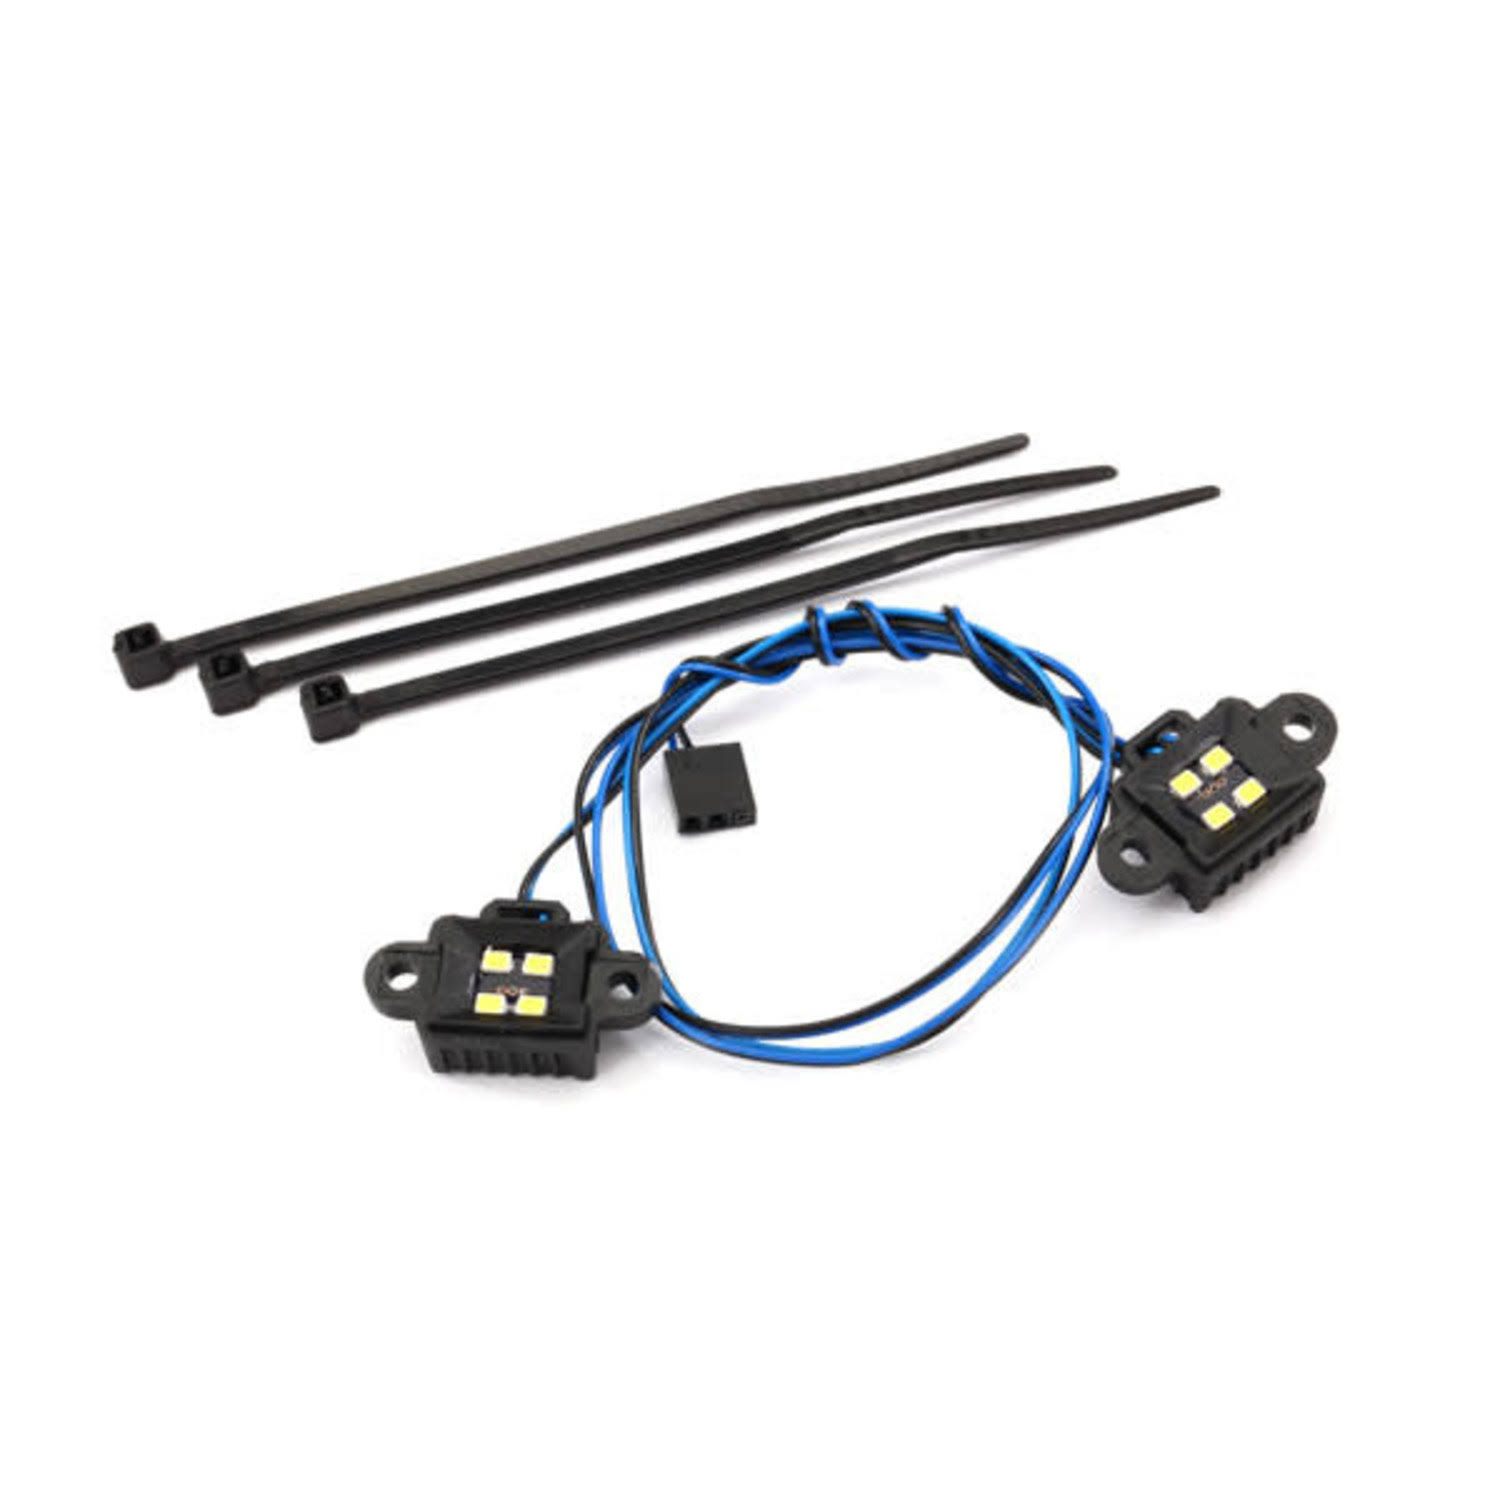 Traxxas LED light harness, rock lights, TRX-6 6X6